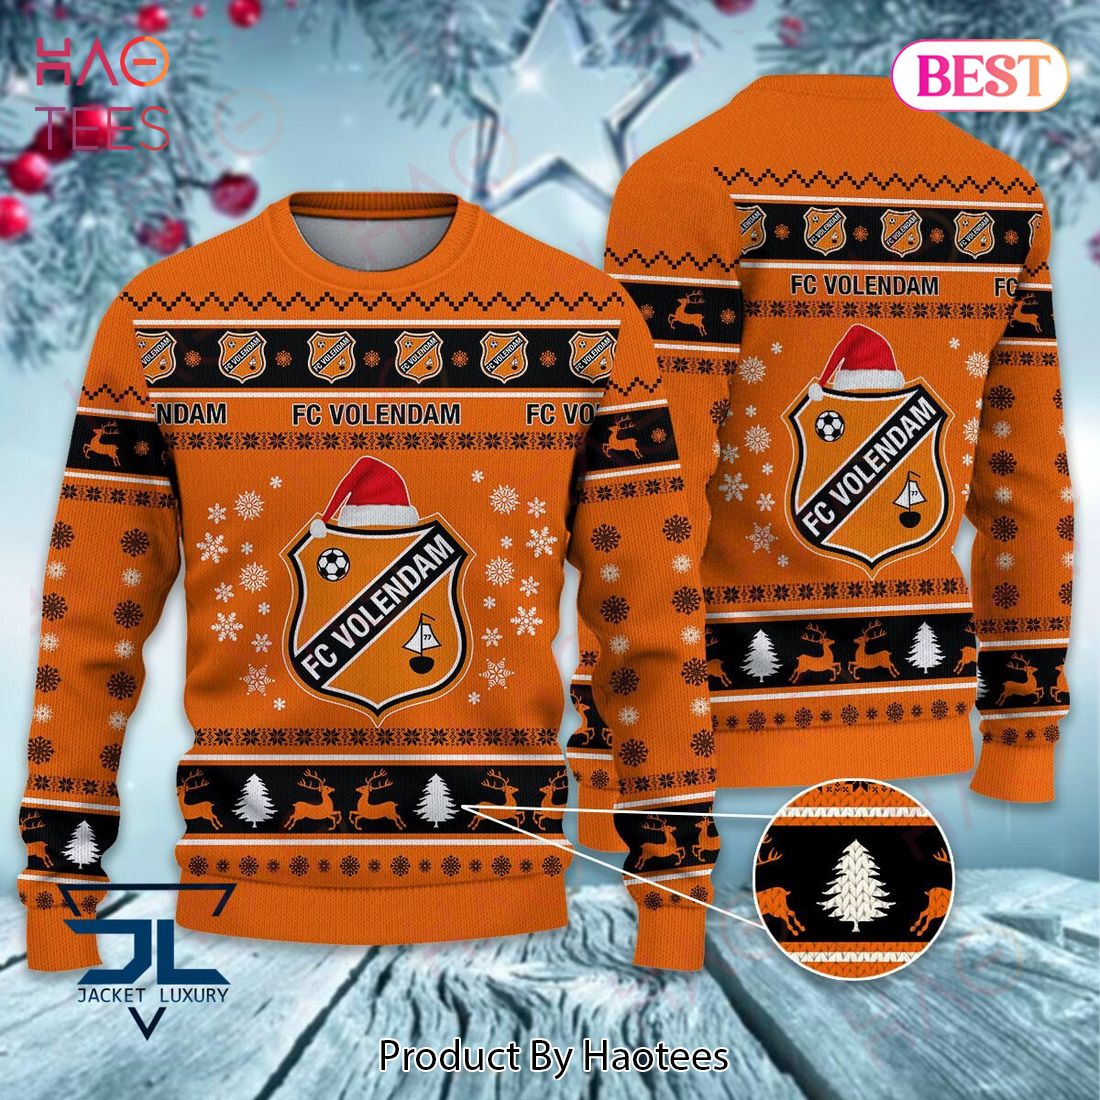 BEST FC Volendam Christmas Luxury Brand Sweater Limited Edition